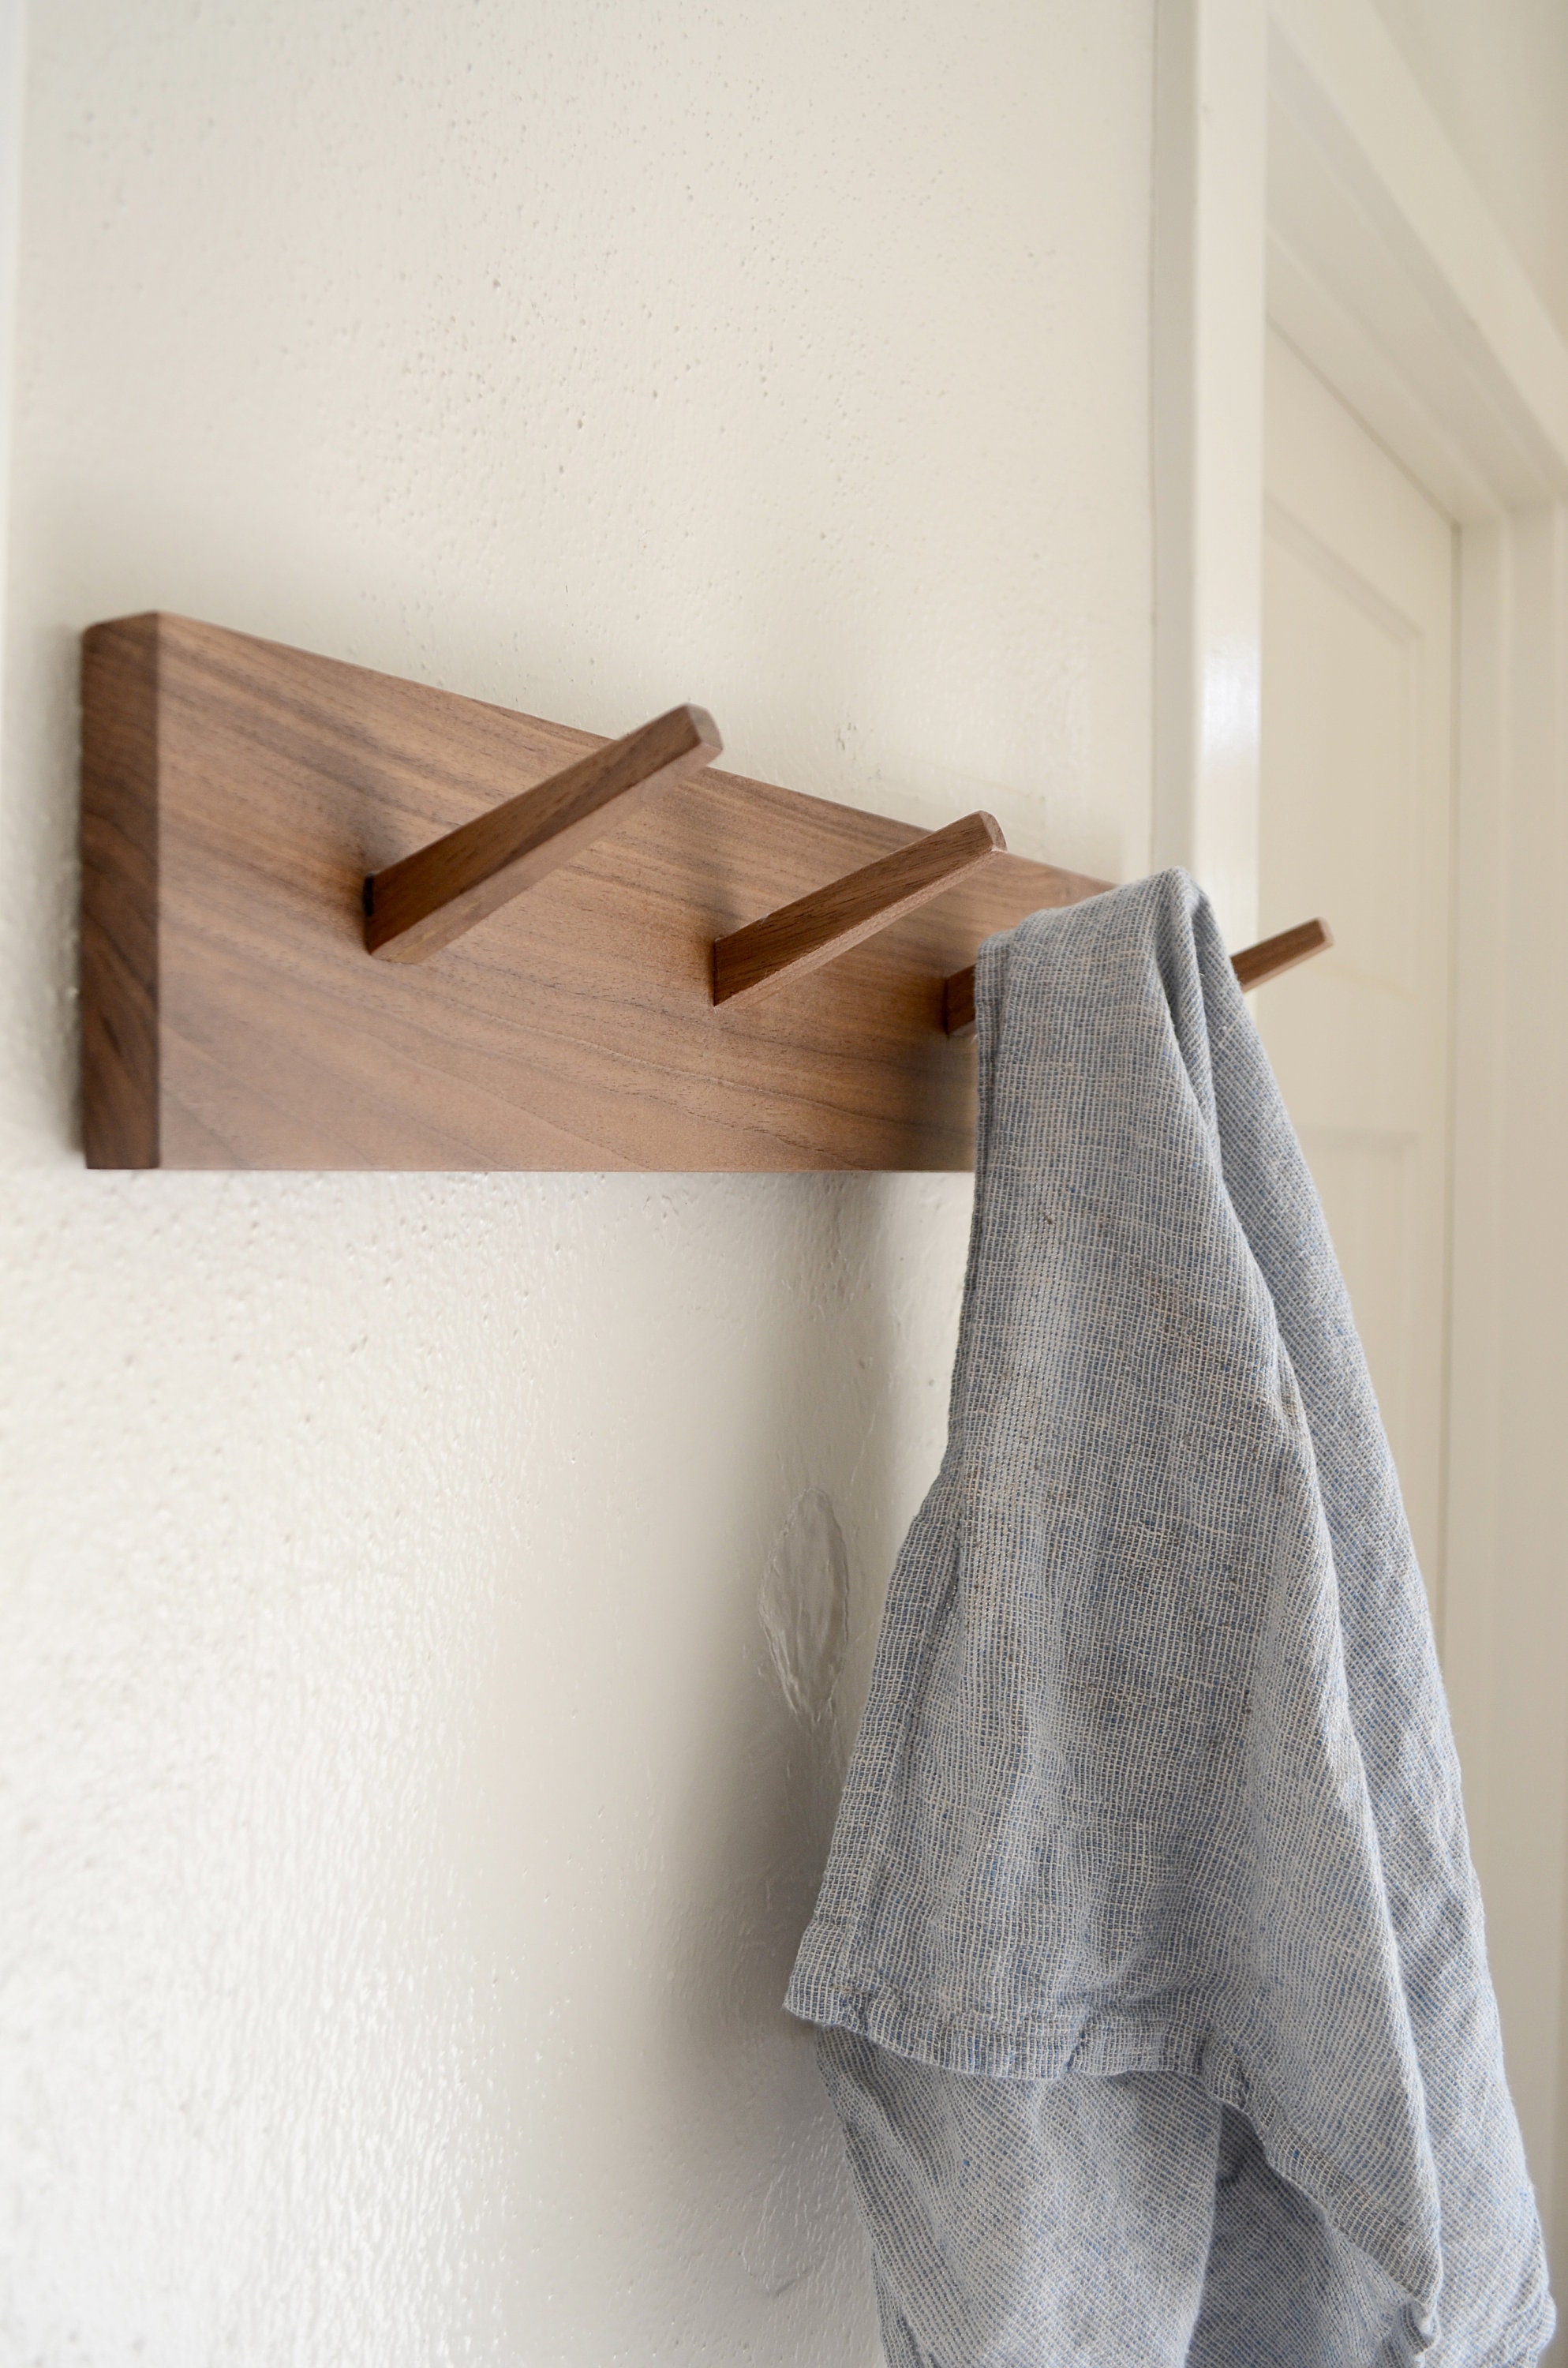 Wooden Coat Rack Hook, Wall Hooks Coat Hooks 5Pcs Round Coat Hooks Door  Hook For Wall, Home Decor, Living Room, Bathroom (Walnut Wood) 